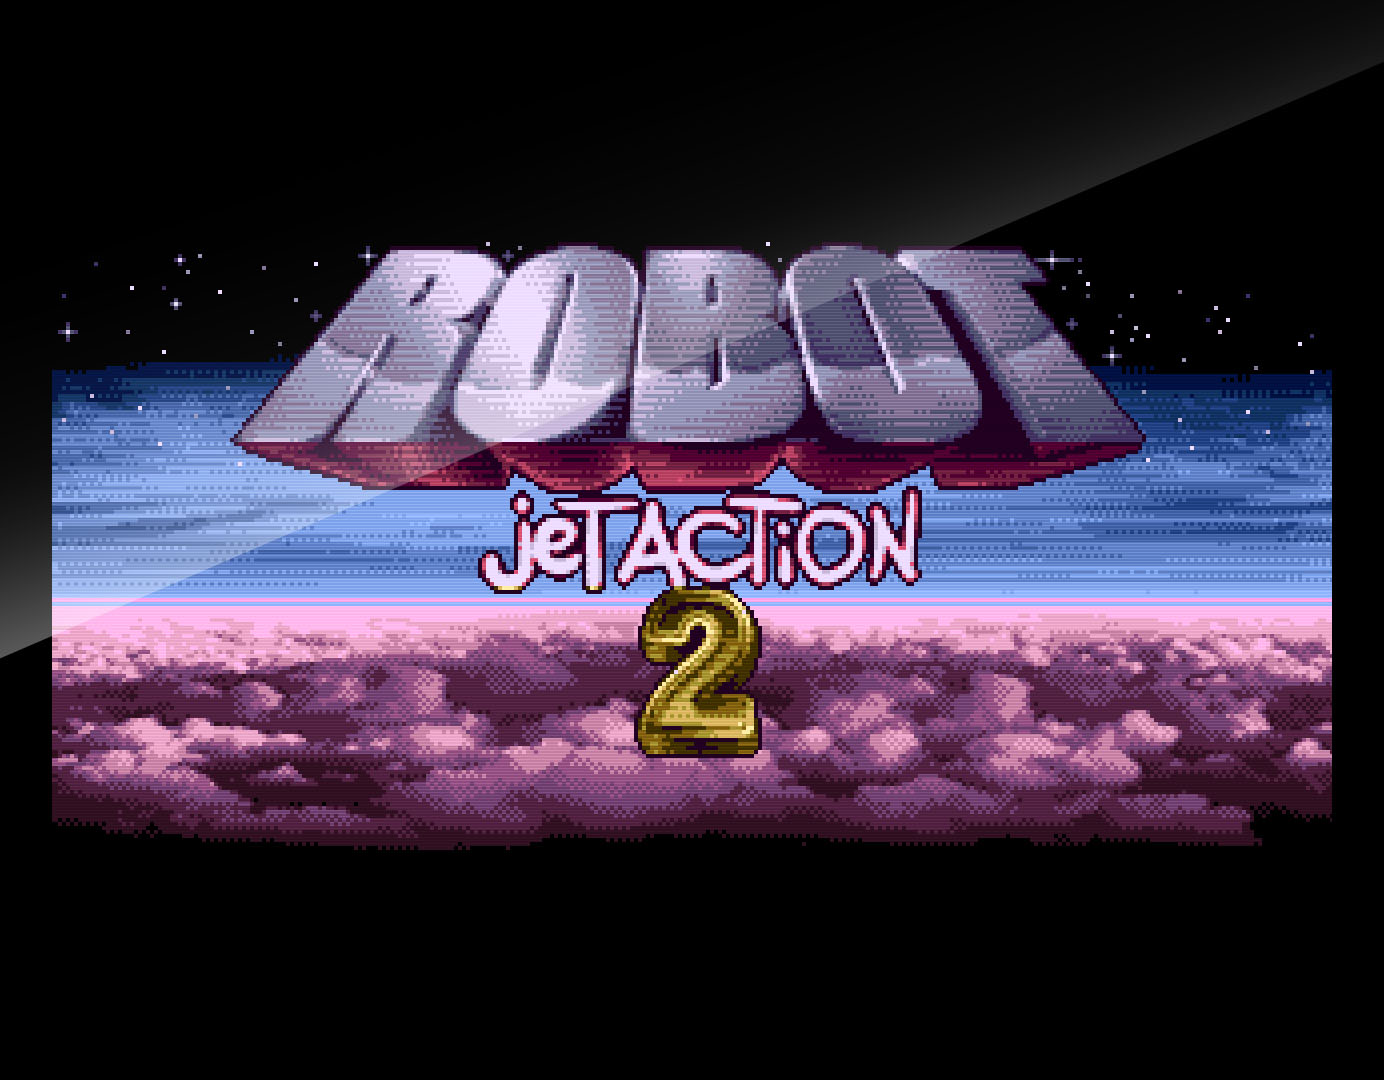 Robot Jet Action 2 Announced